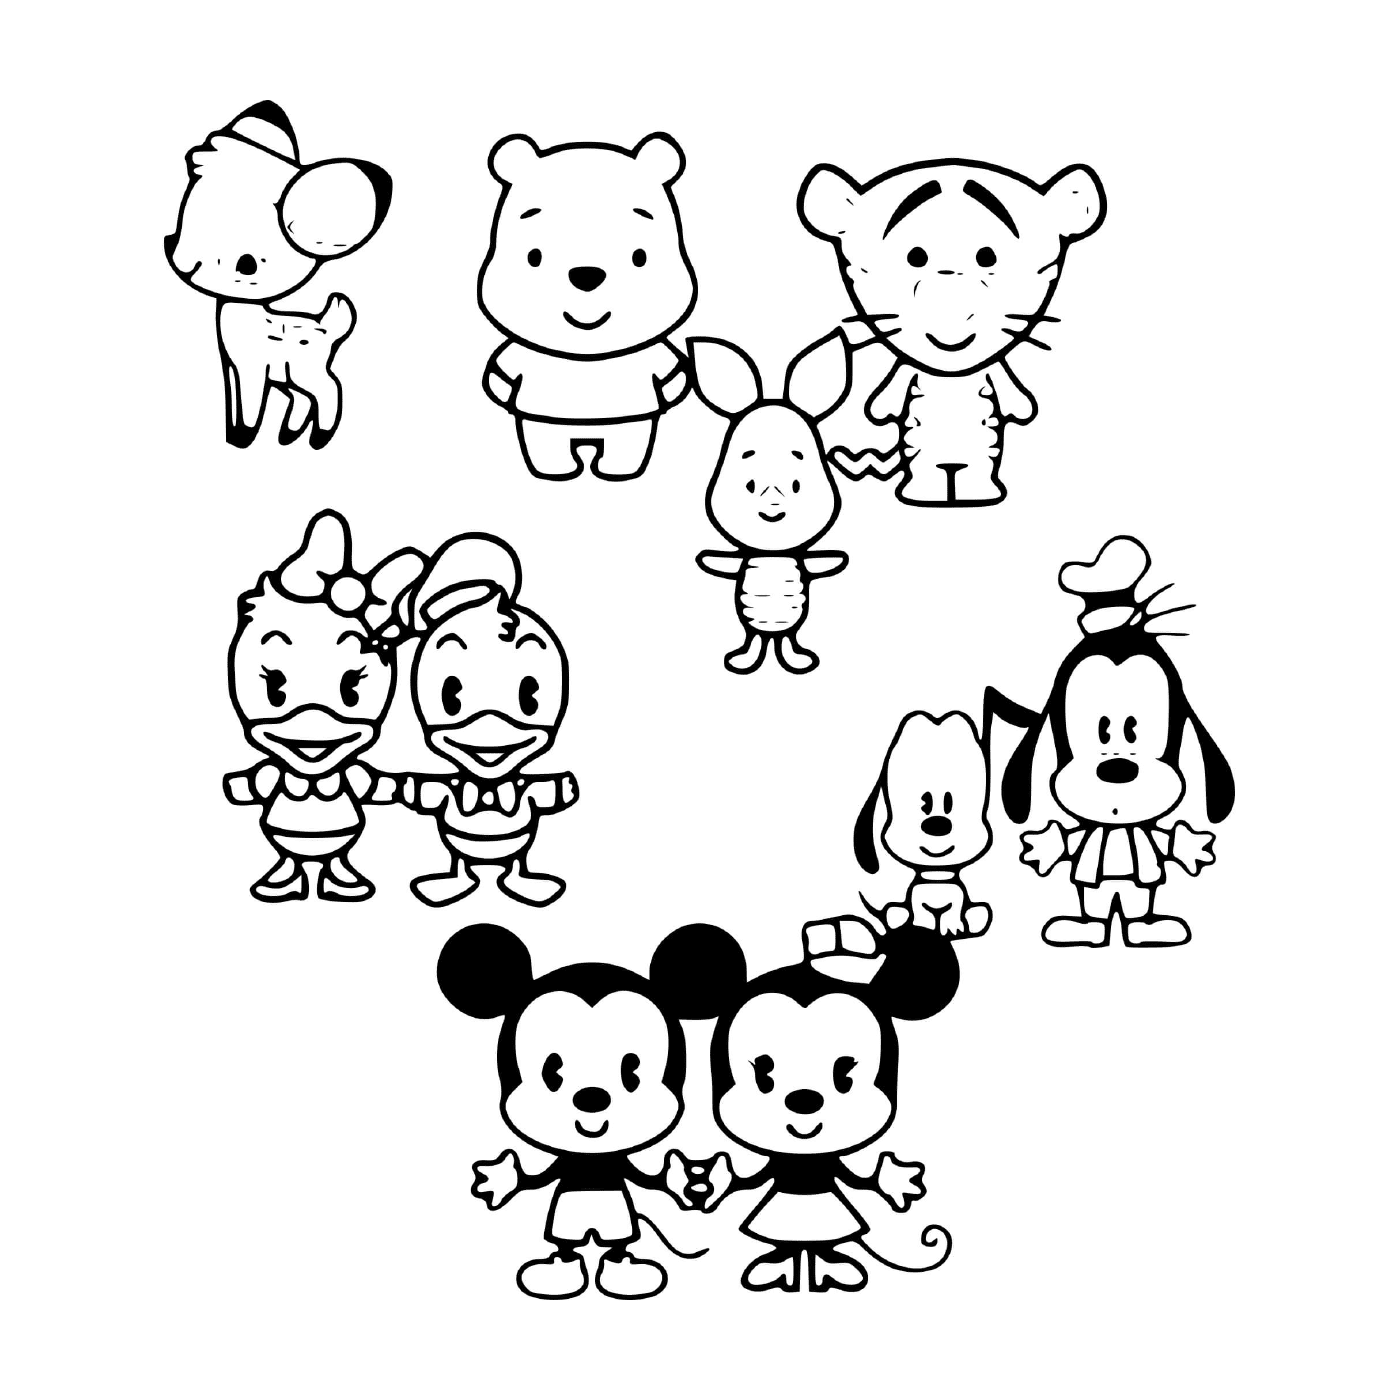  Disney cartoon characters 